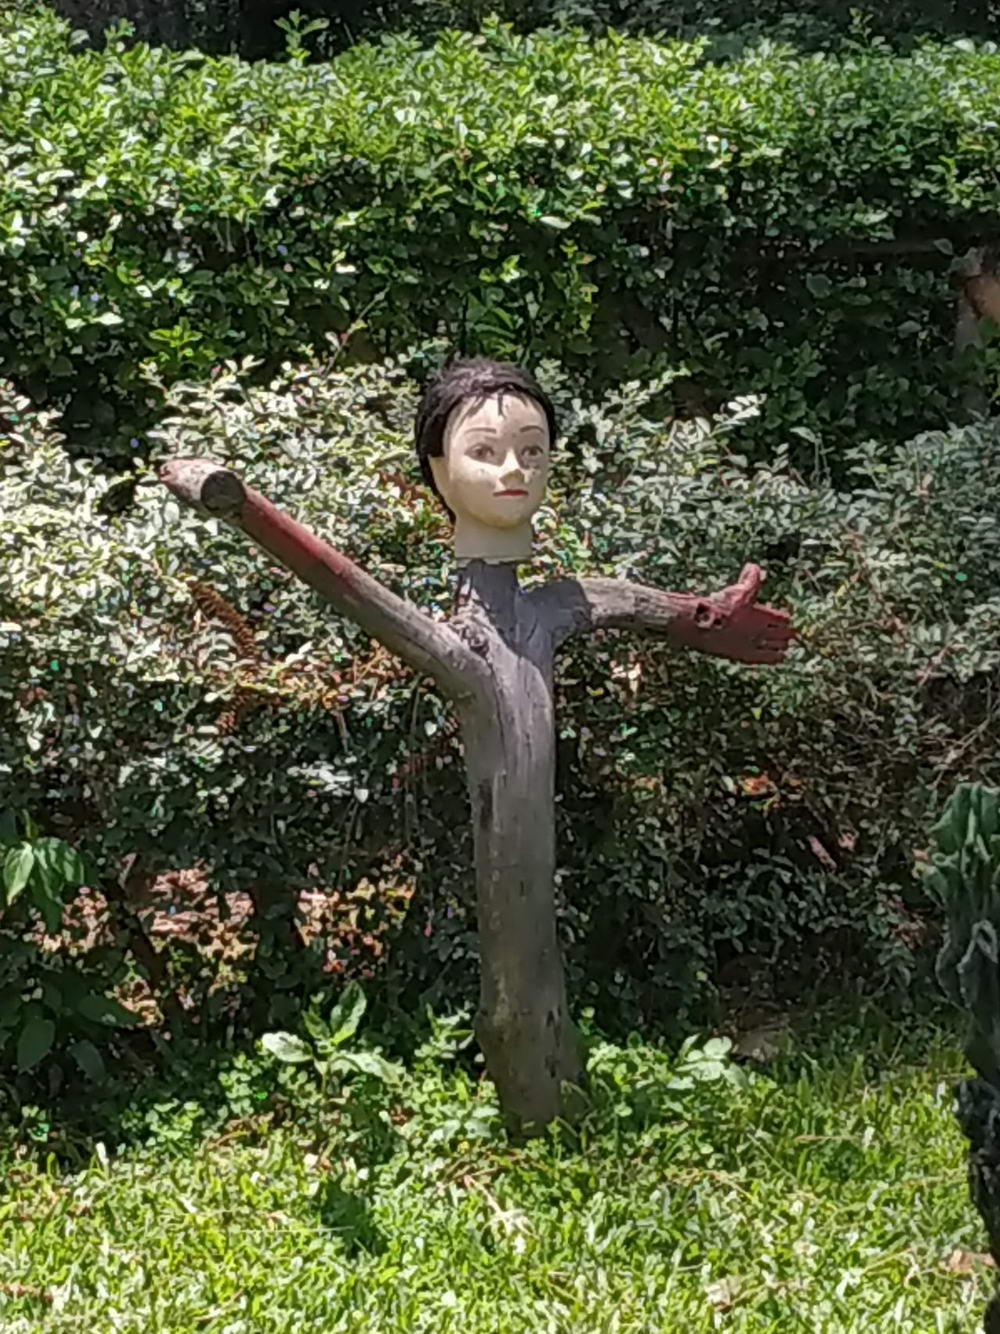 wtf images - creepy child garden statue